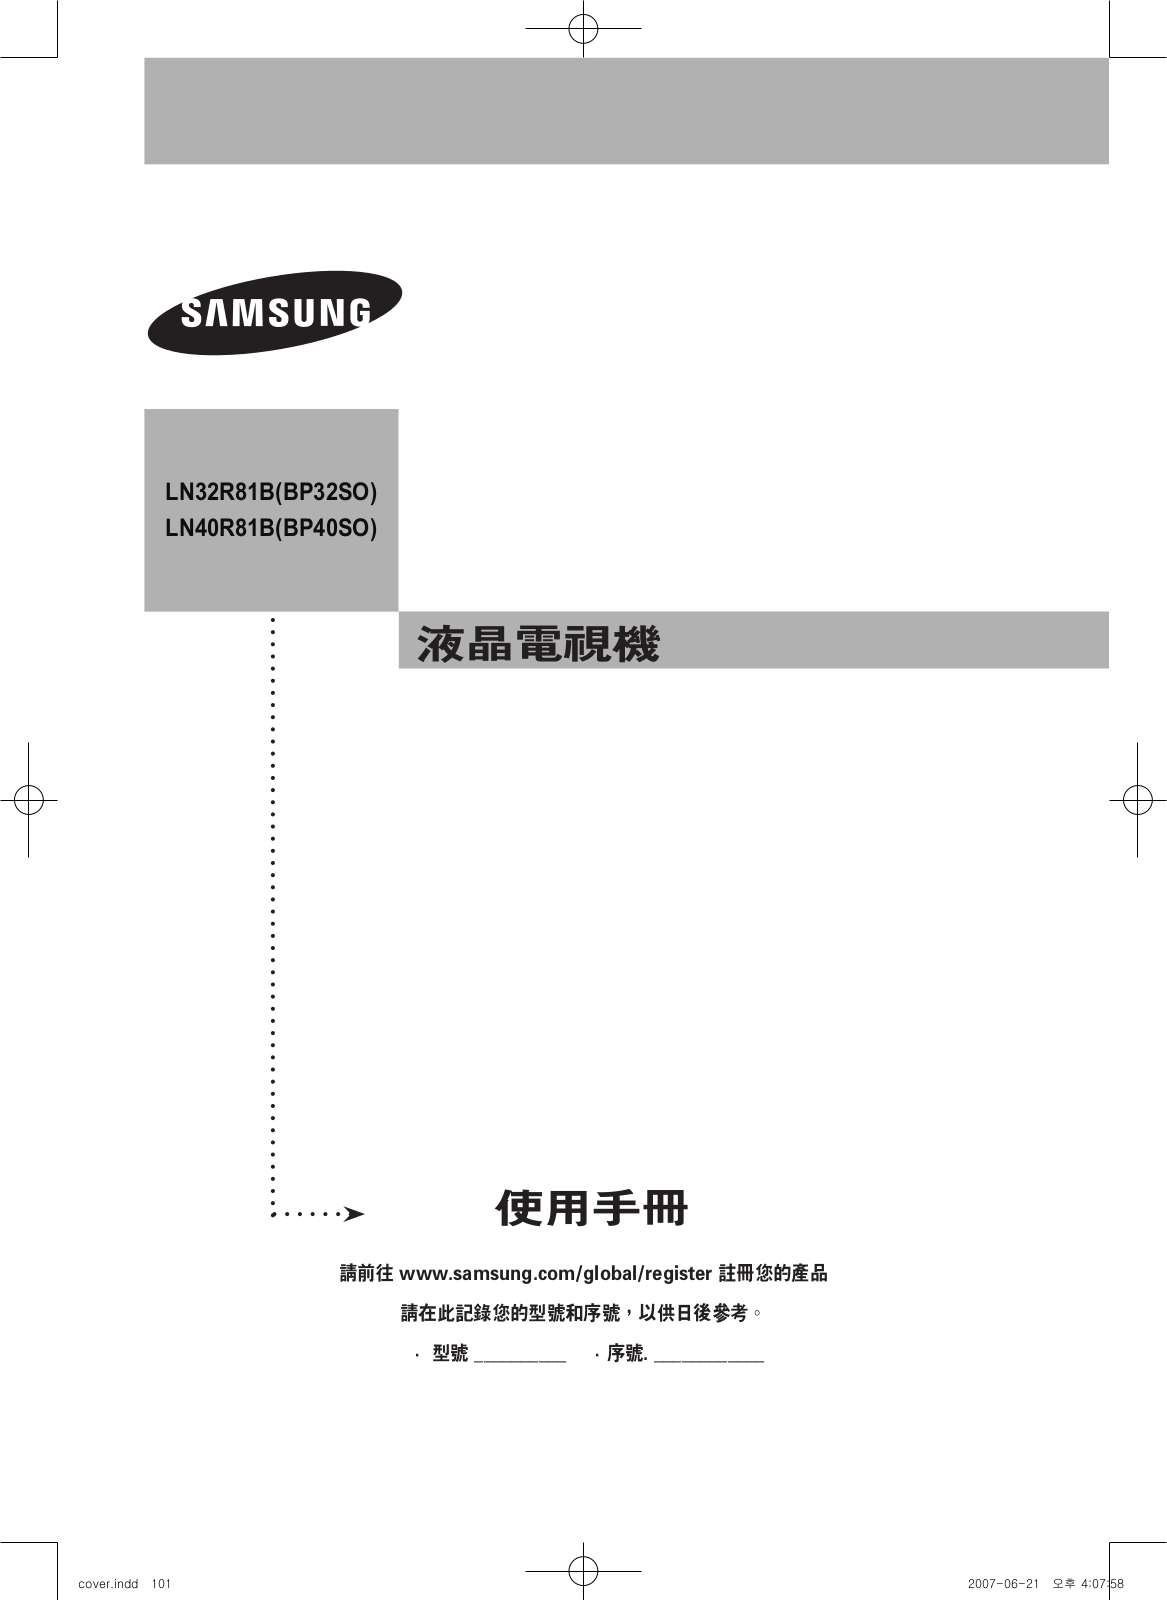 Samsung LN32R81B, LN40R81B User Manual